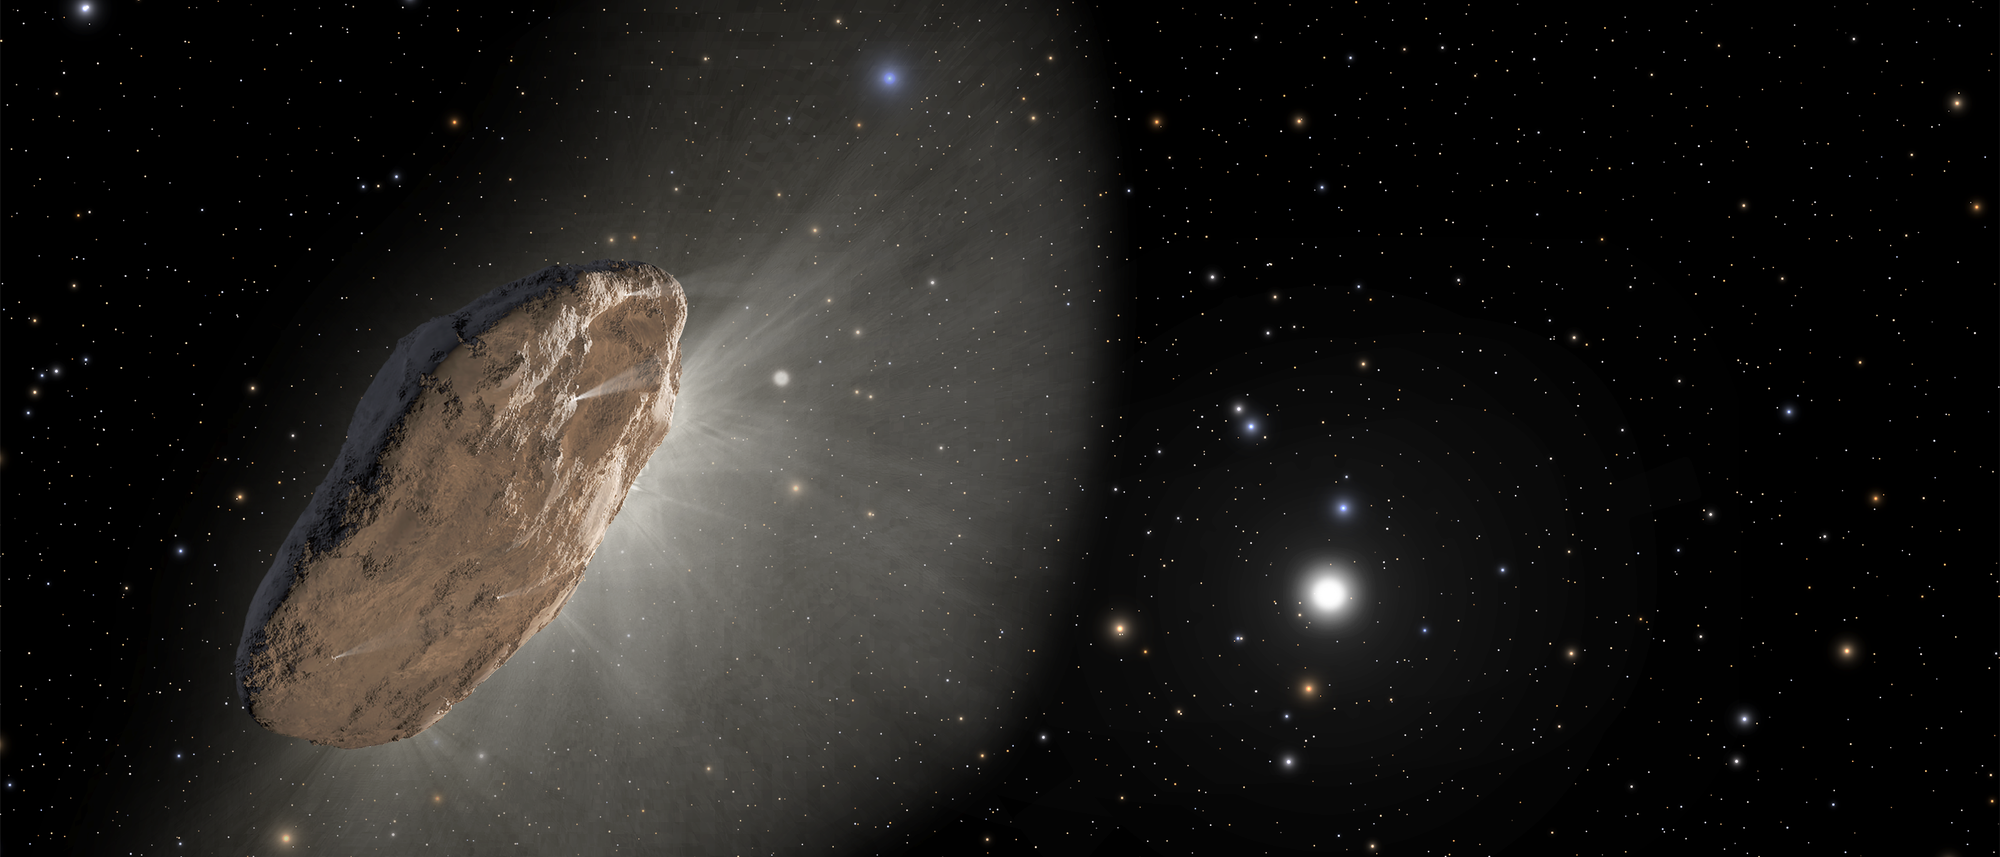 Das interstellare Objekt 'Oumuamua